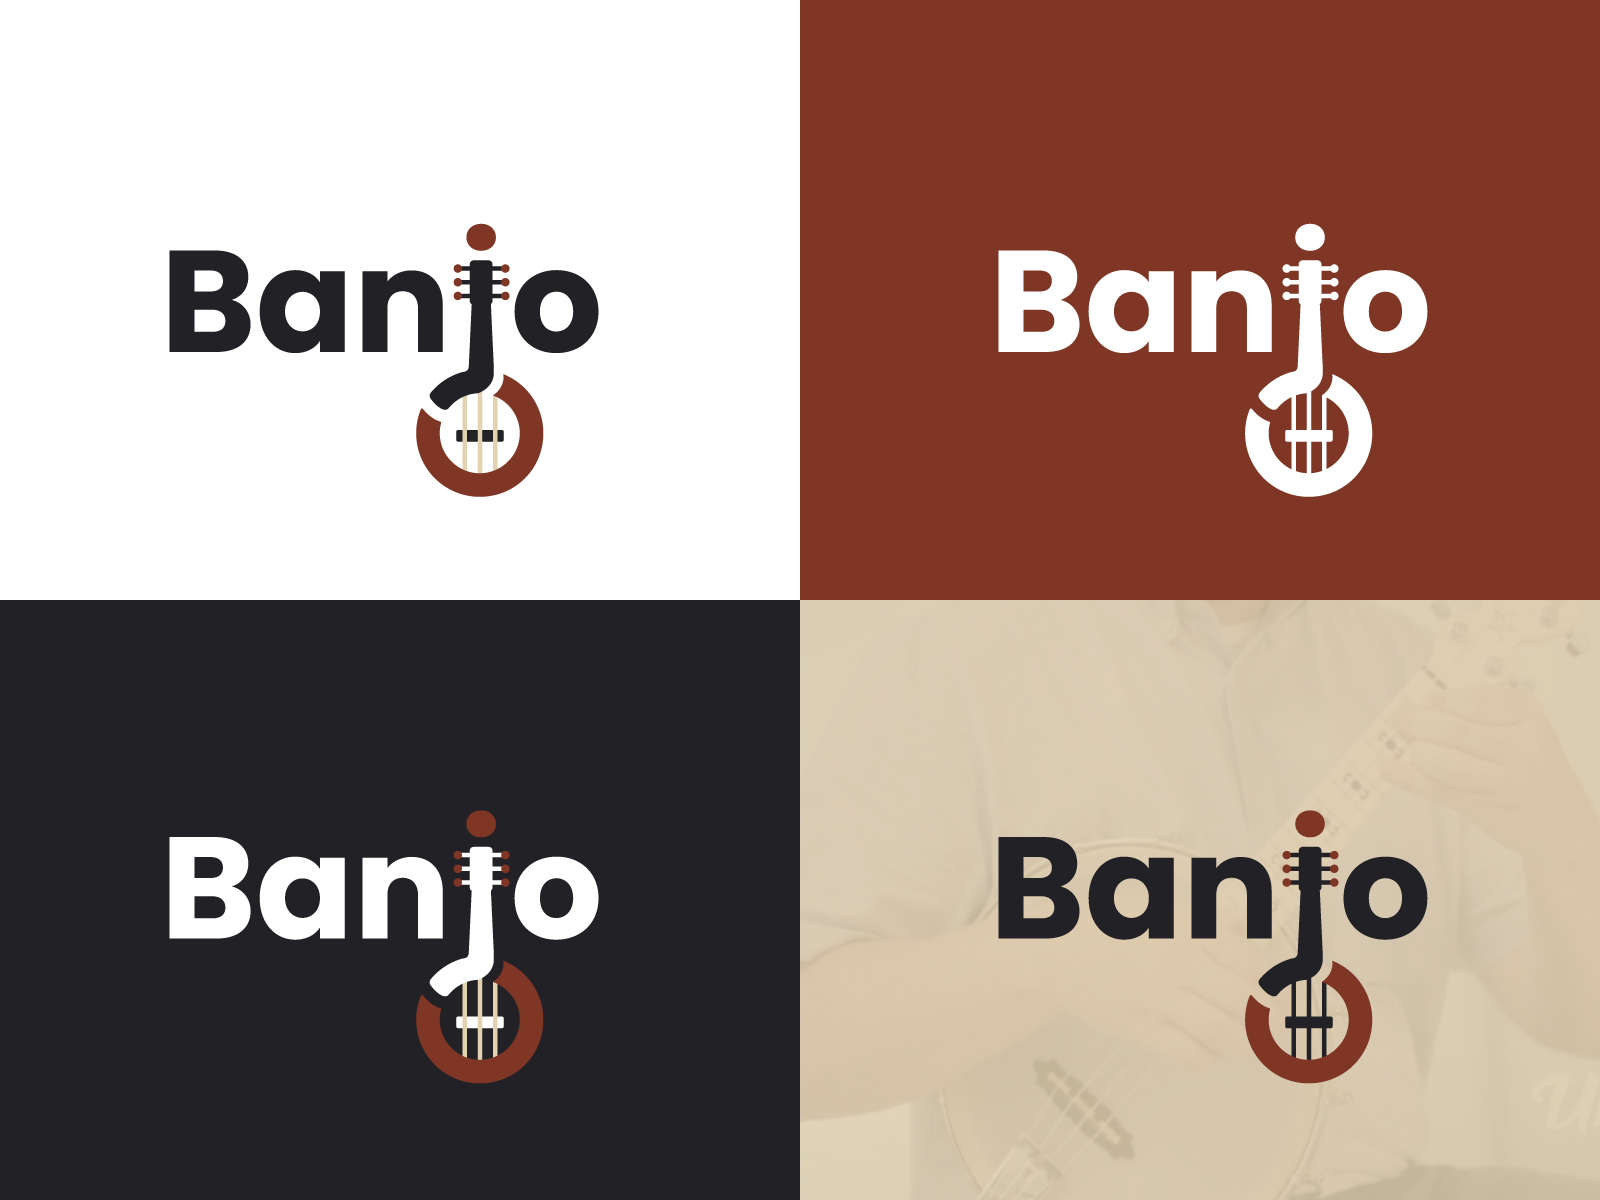 Digital Banjo Group | Local business | Bhusawal